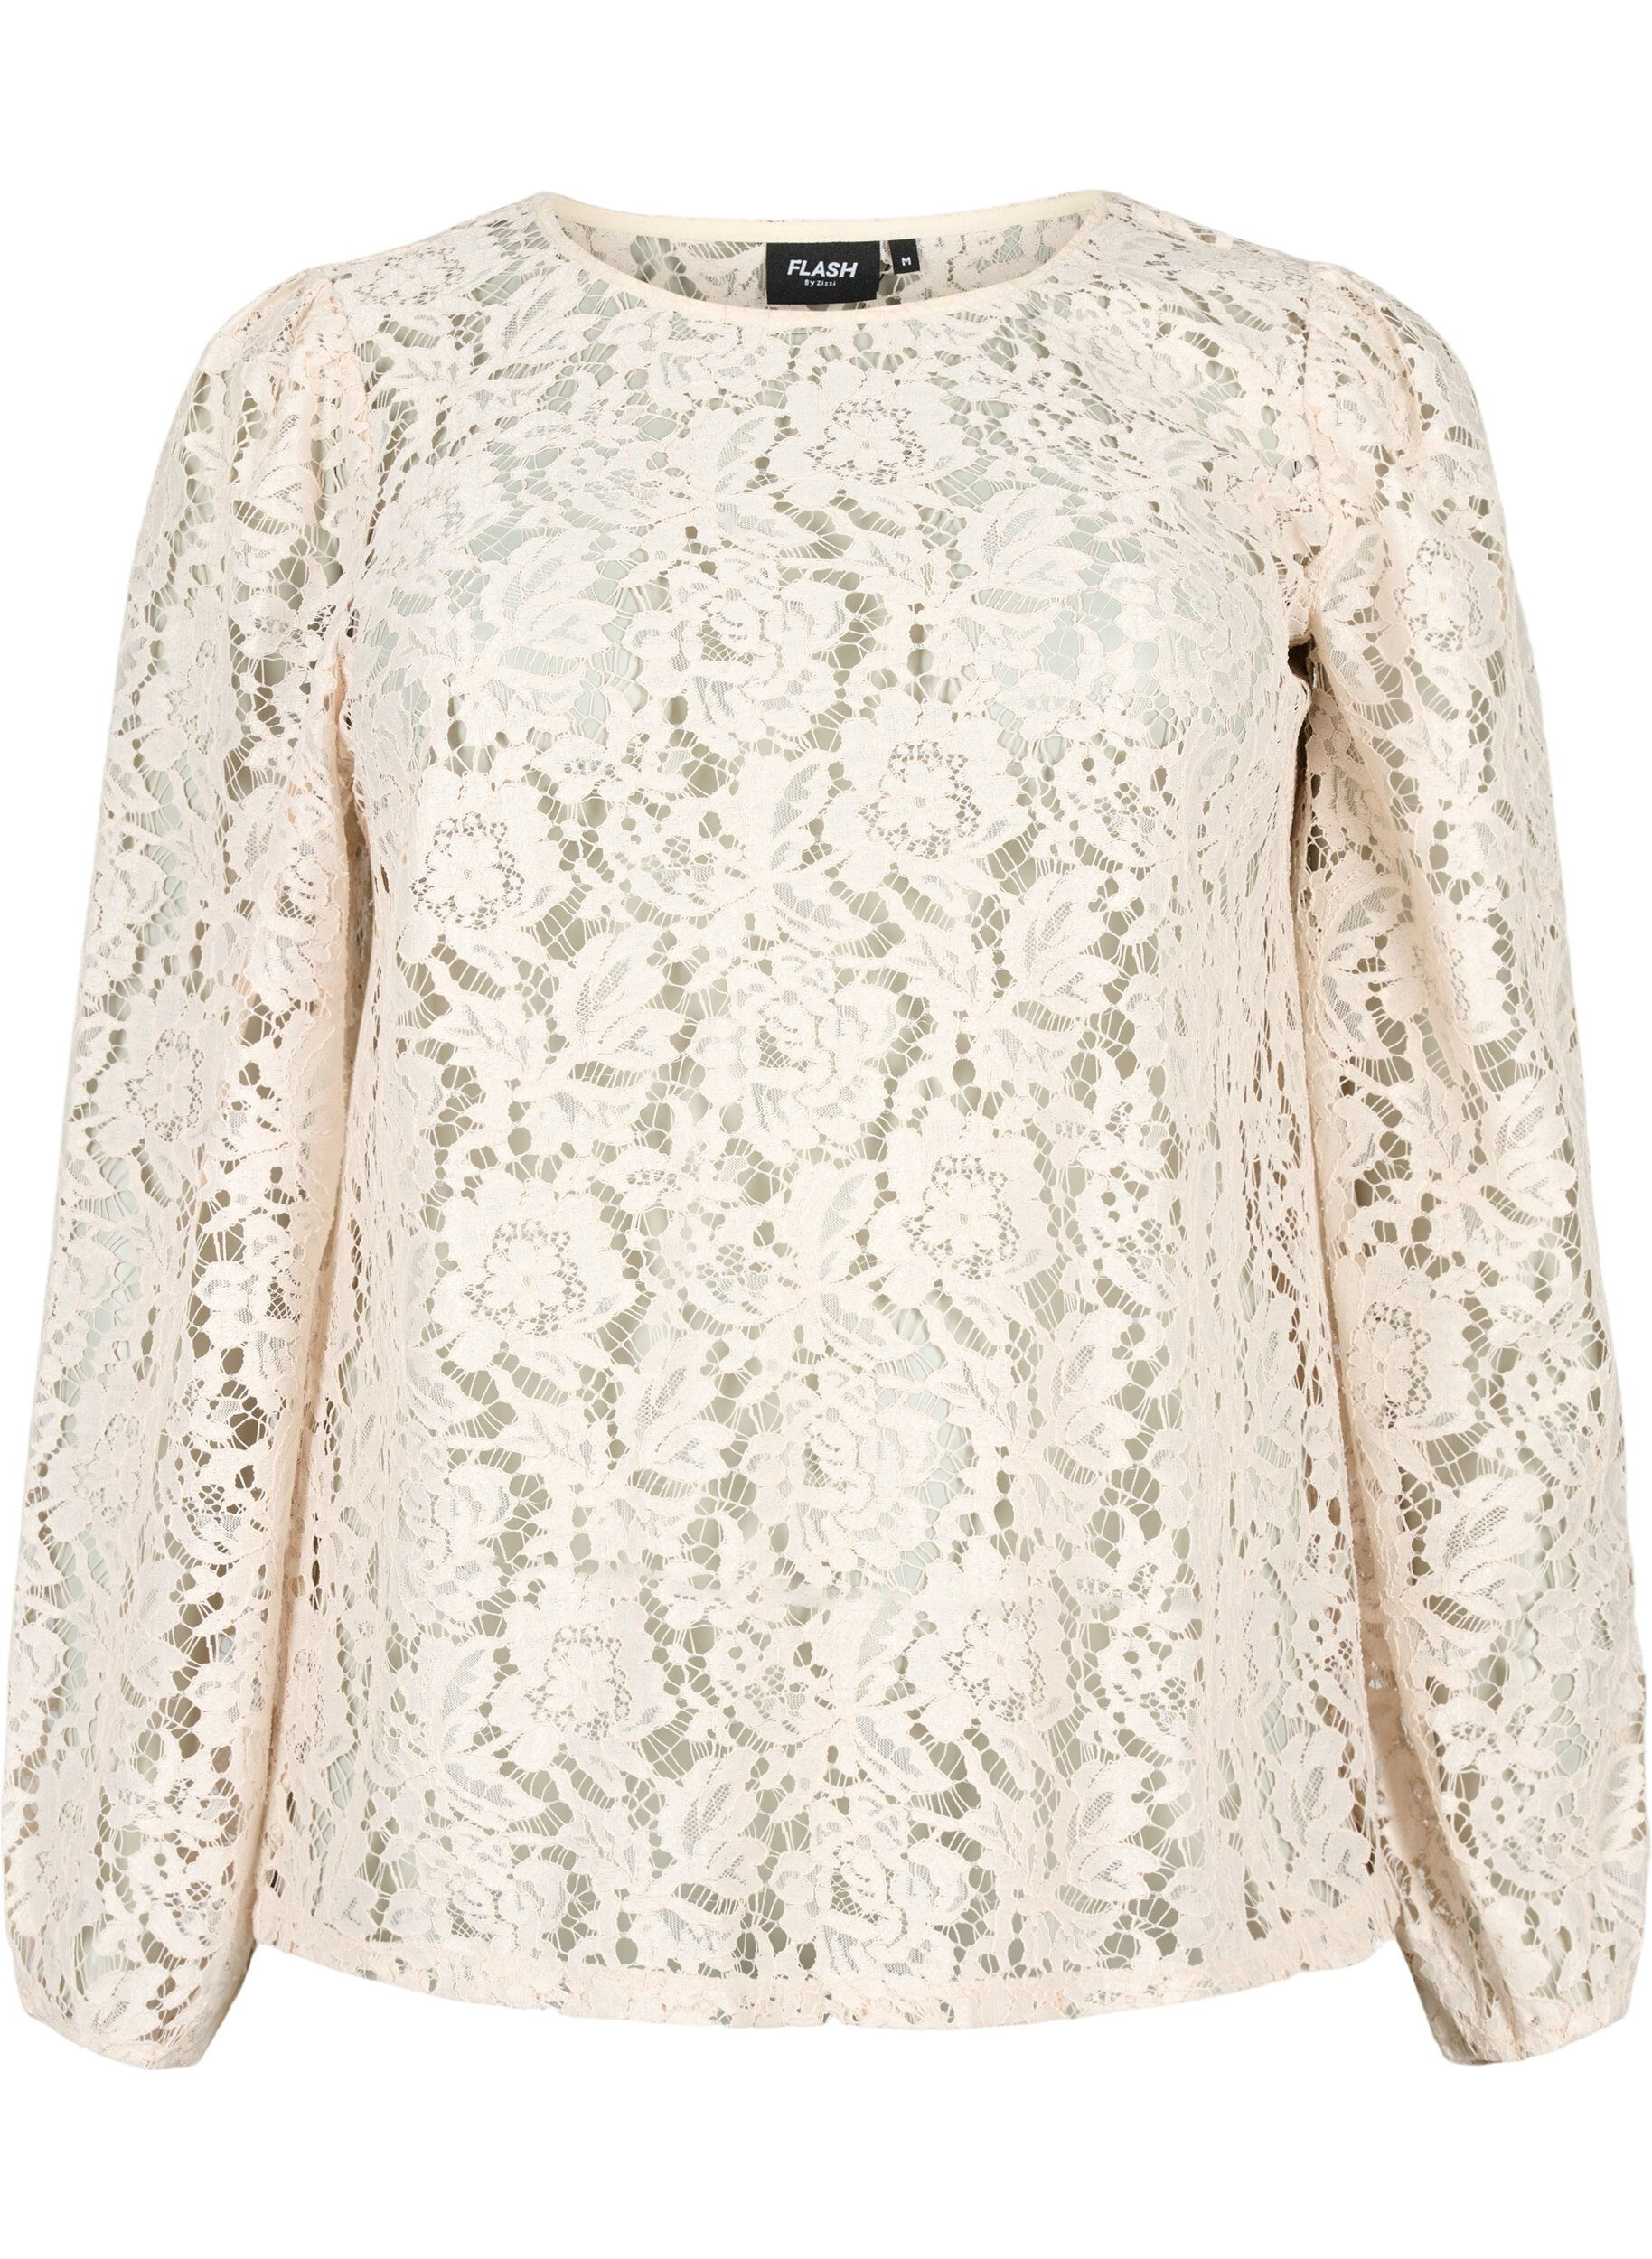 FLASH - Long sleeve lace blouse - Beige - Sz. 42-60 - Zizzifashion